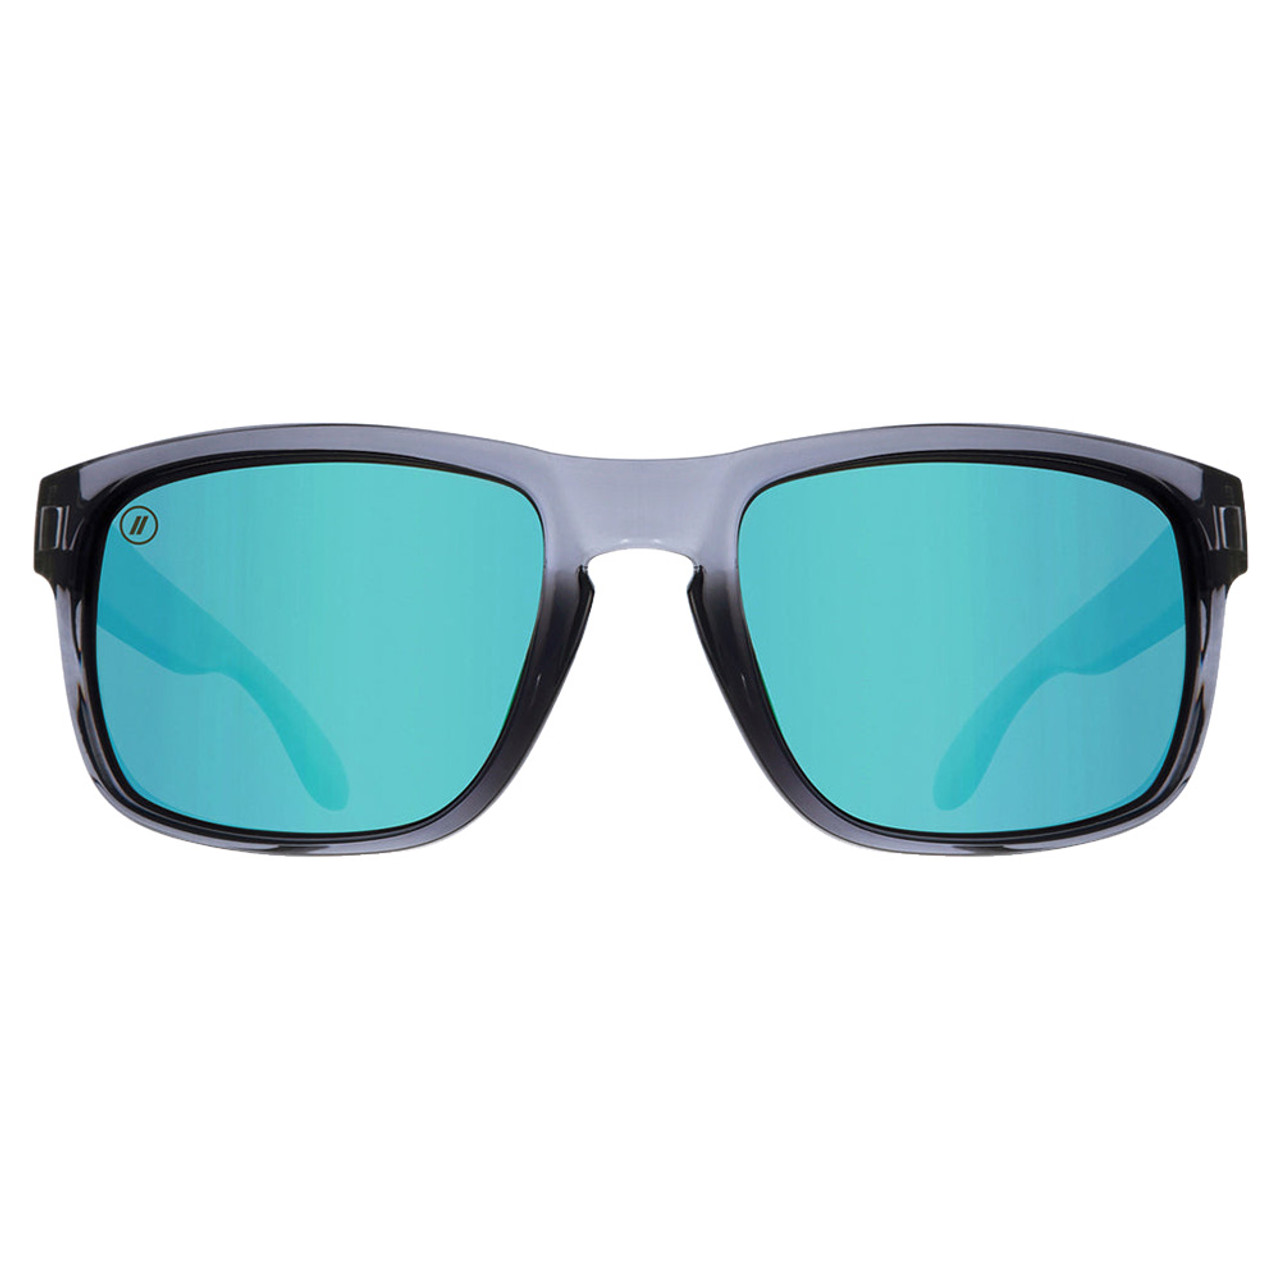 Polarized Blue Light Filtering Sunglasses - SWAG